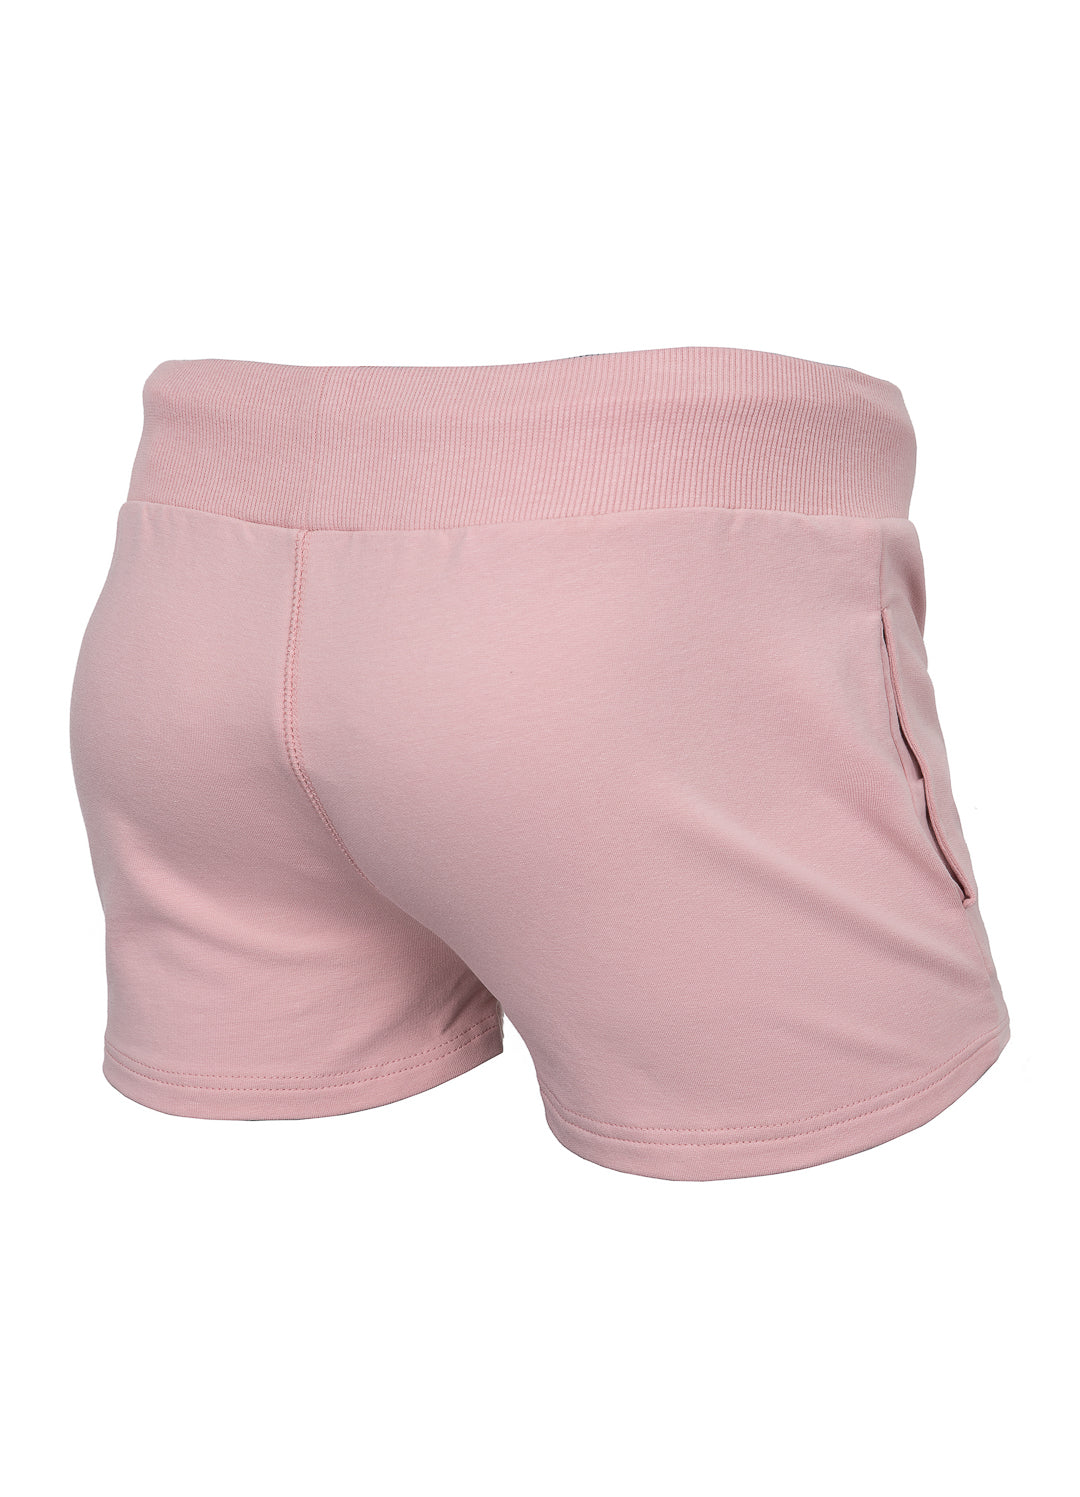 Women&#39;s shorts MARIPOSA French Terry Pink - Pitbull West Coast International Store 